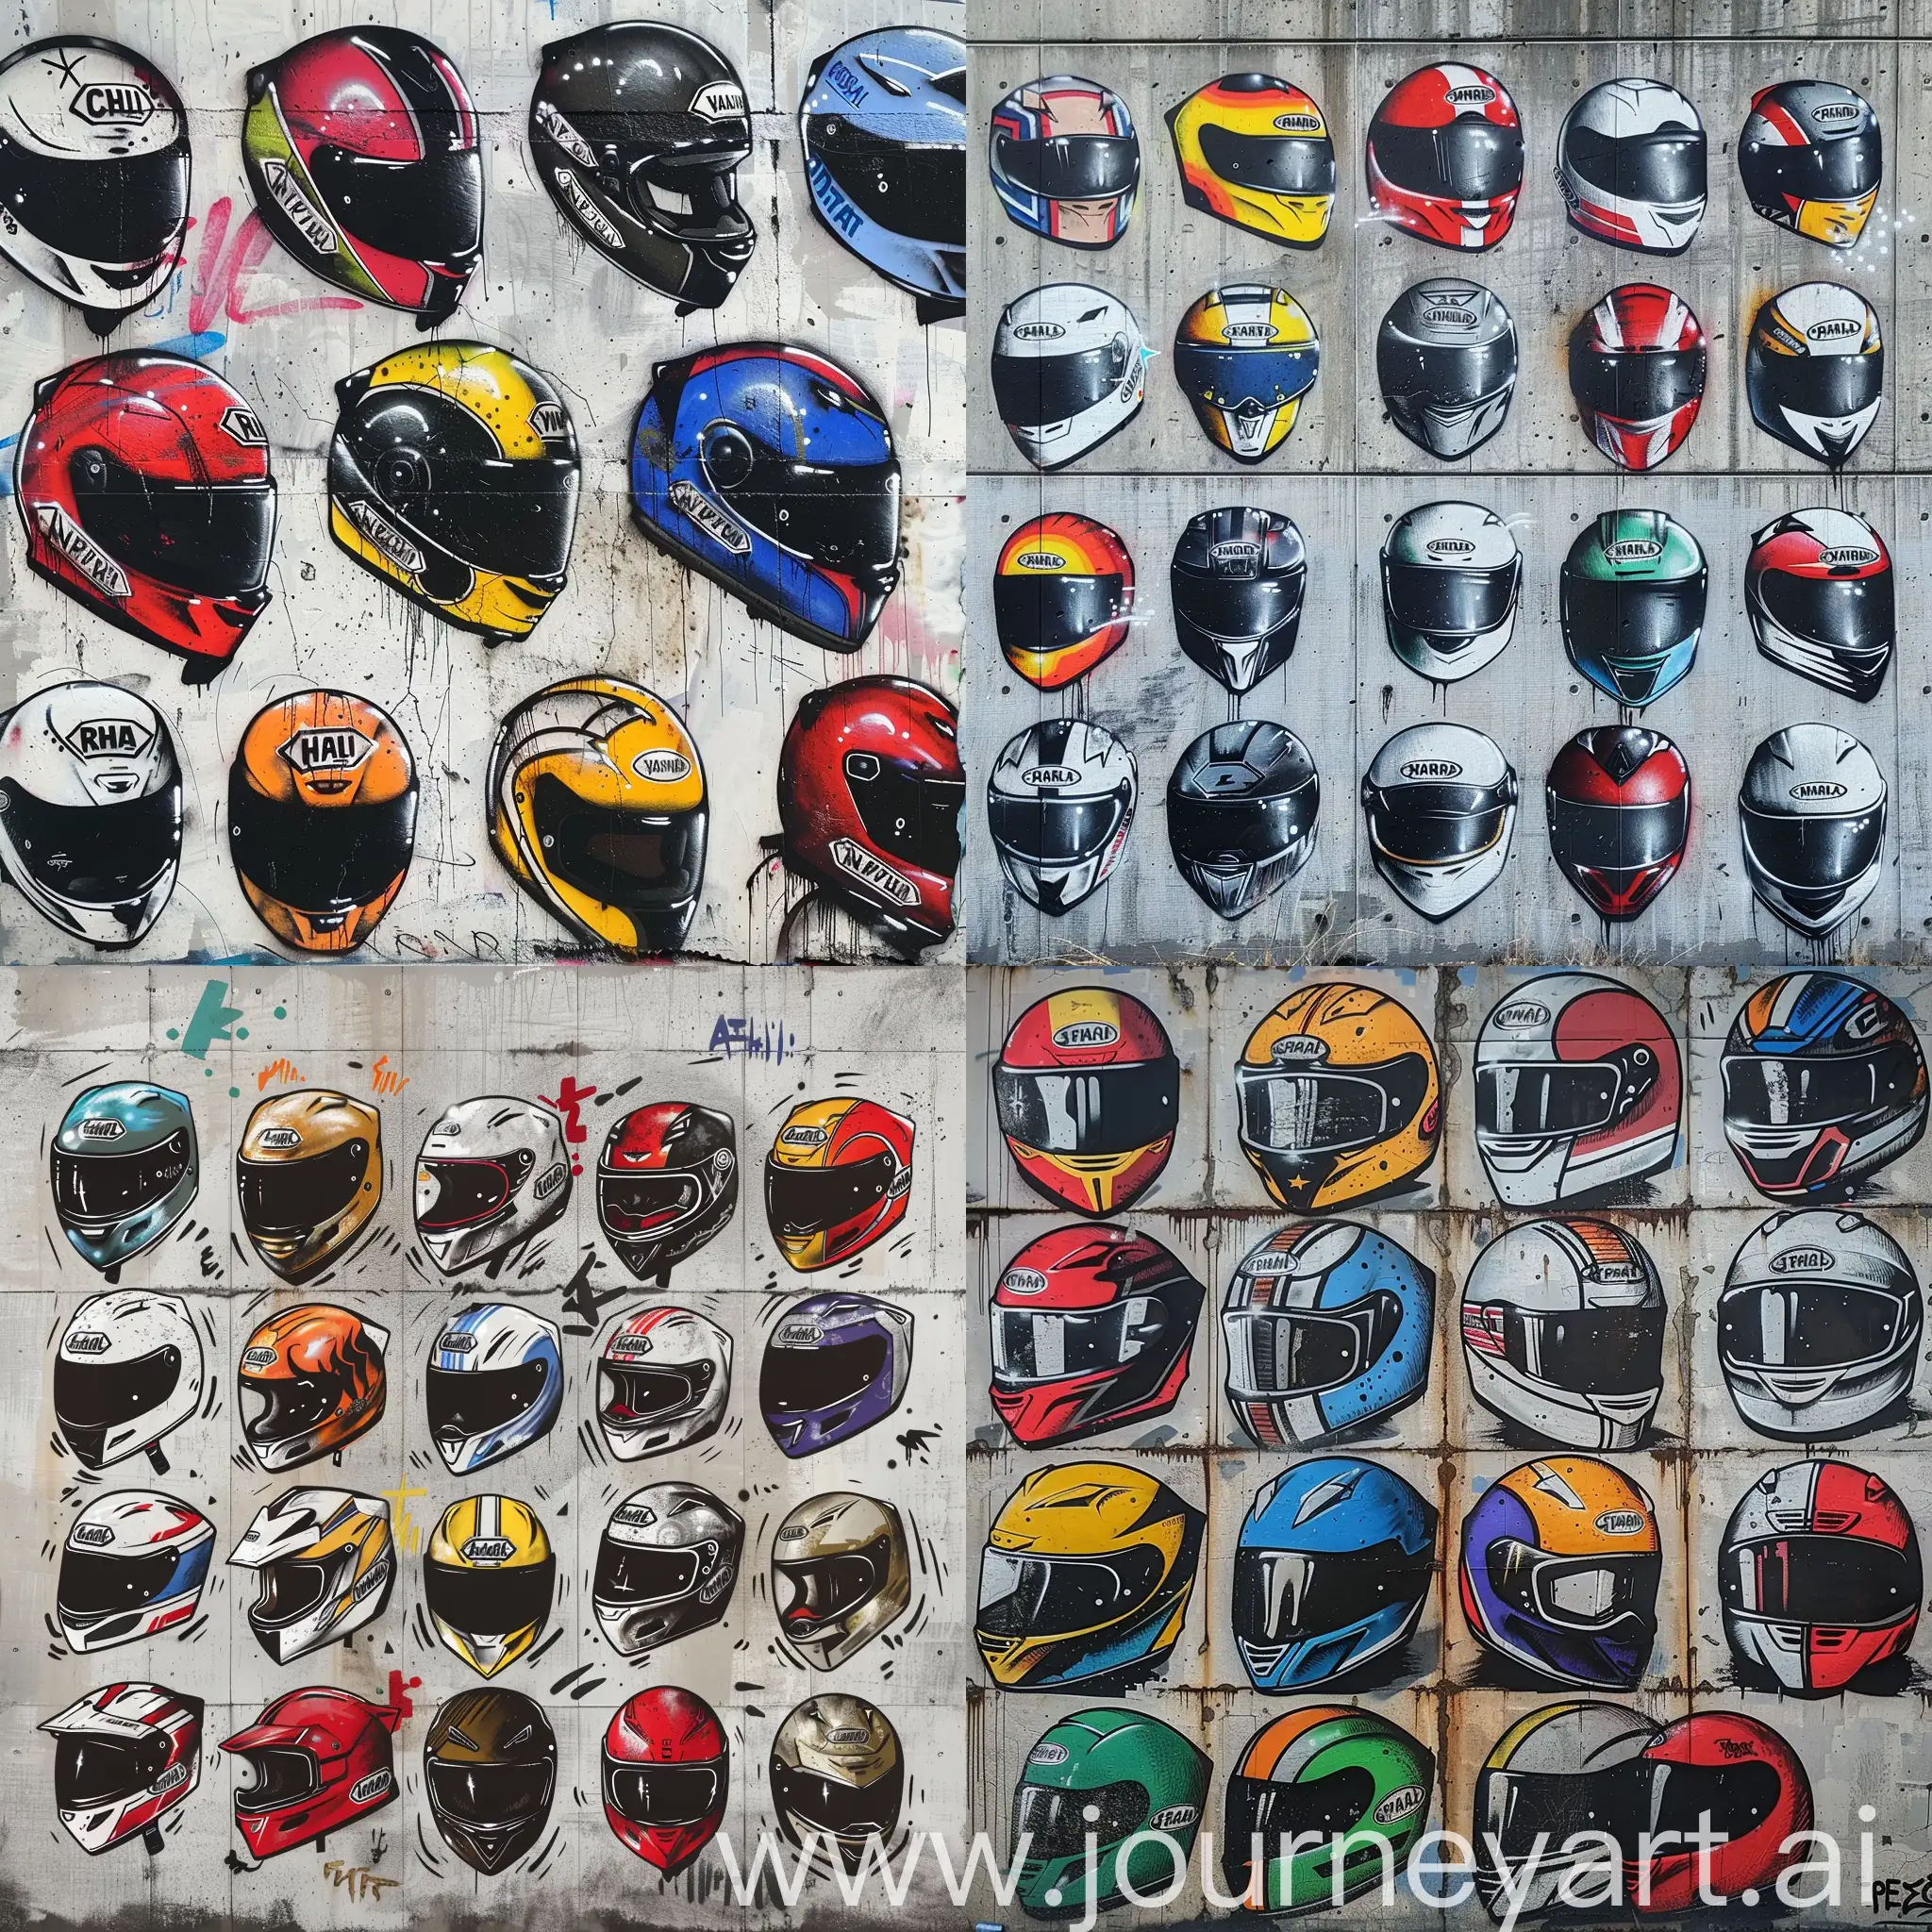 Vibrant-Motorcycle-Helmet-Graffiti-Wall-Art